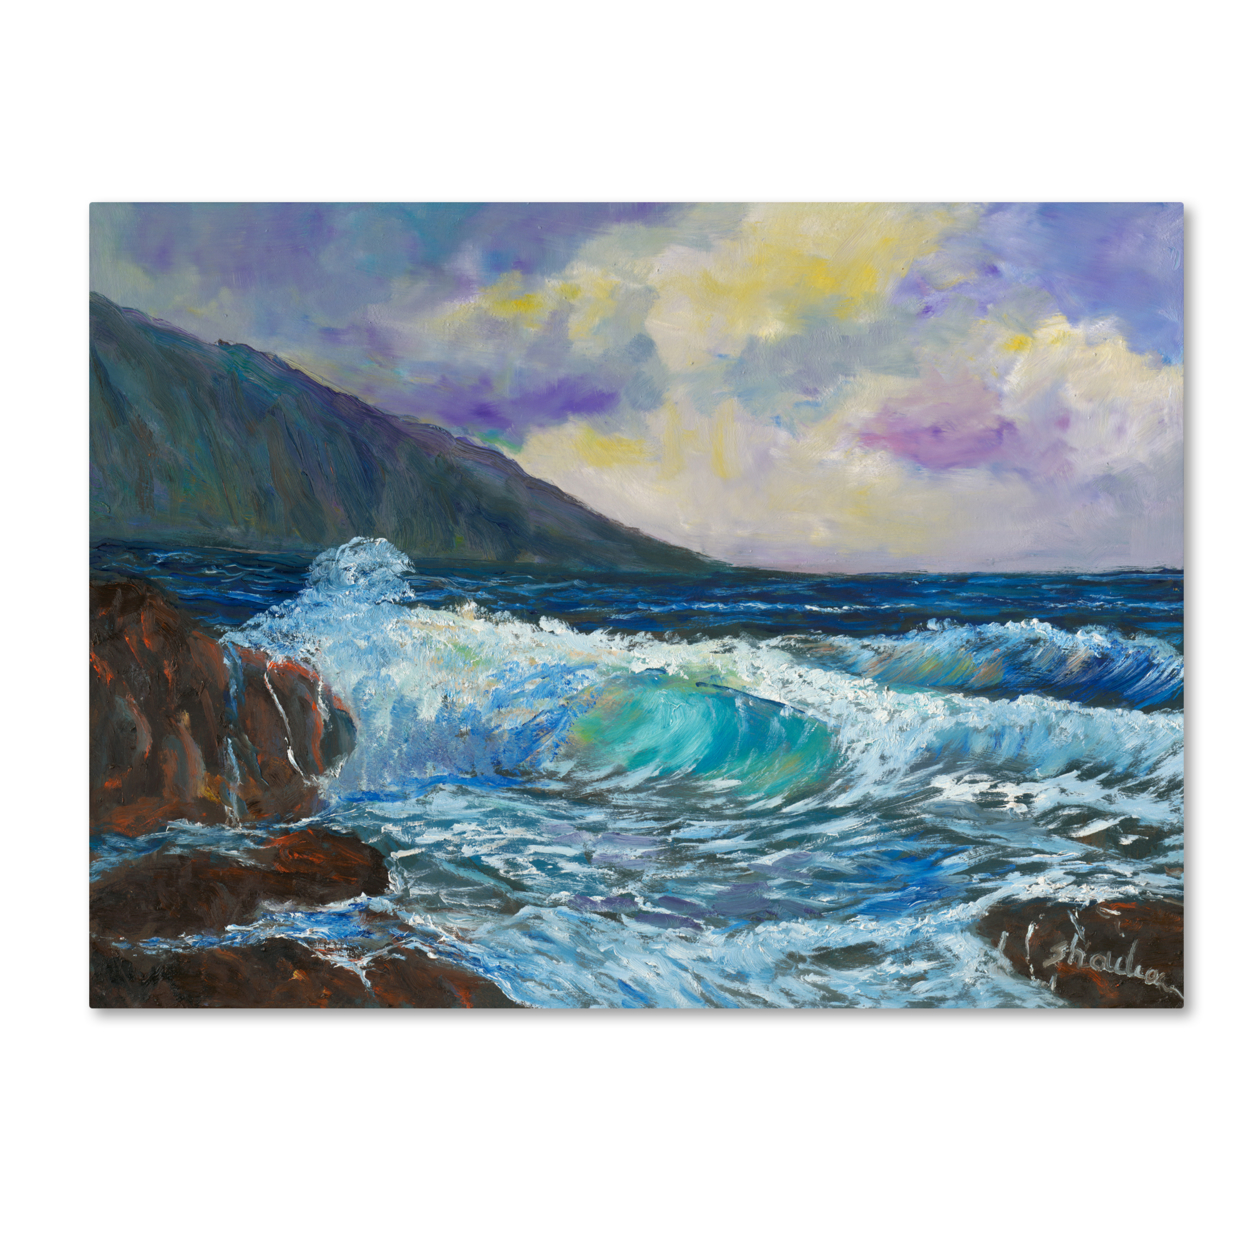 Manor Shadian 'Maui's Enchanting Seas' Canvas Wall Art 35 X 47 Inches